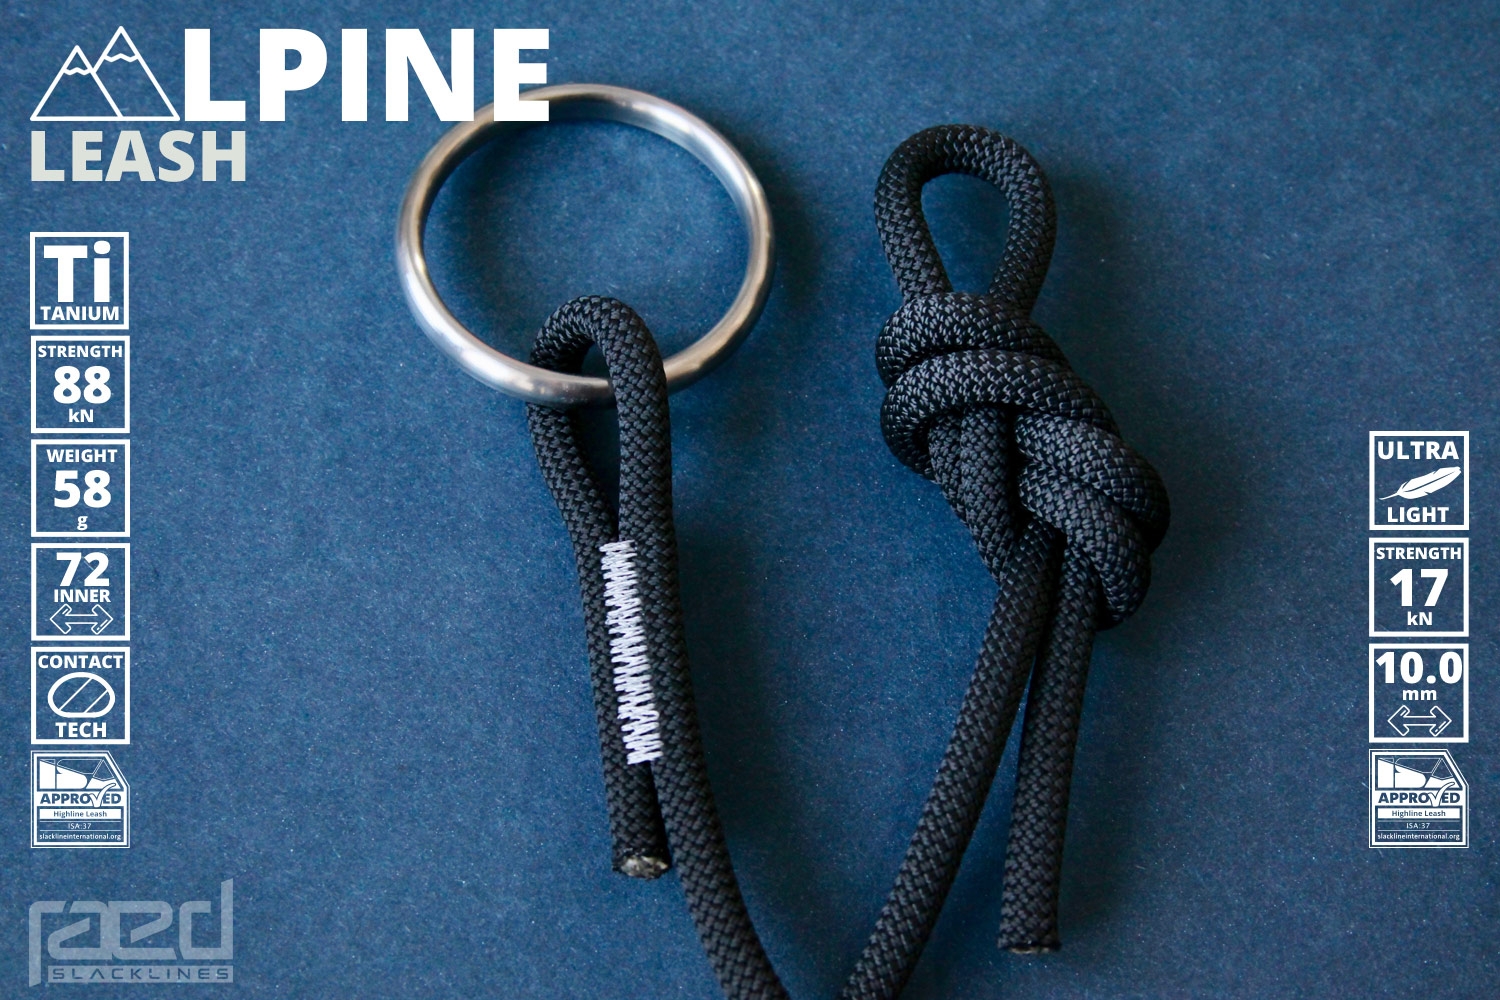 Alpine highline leash set